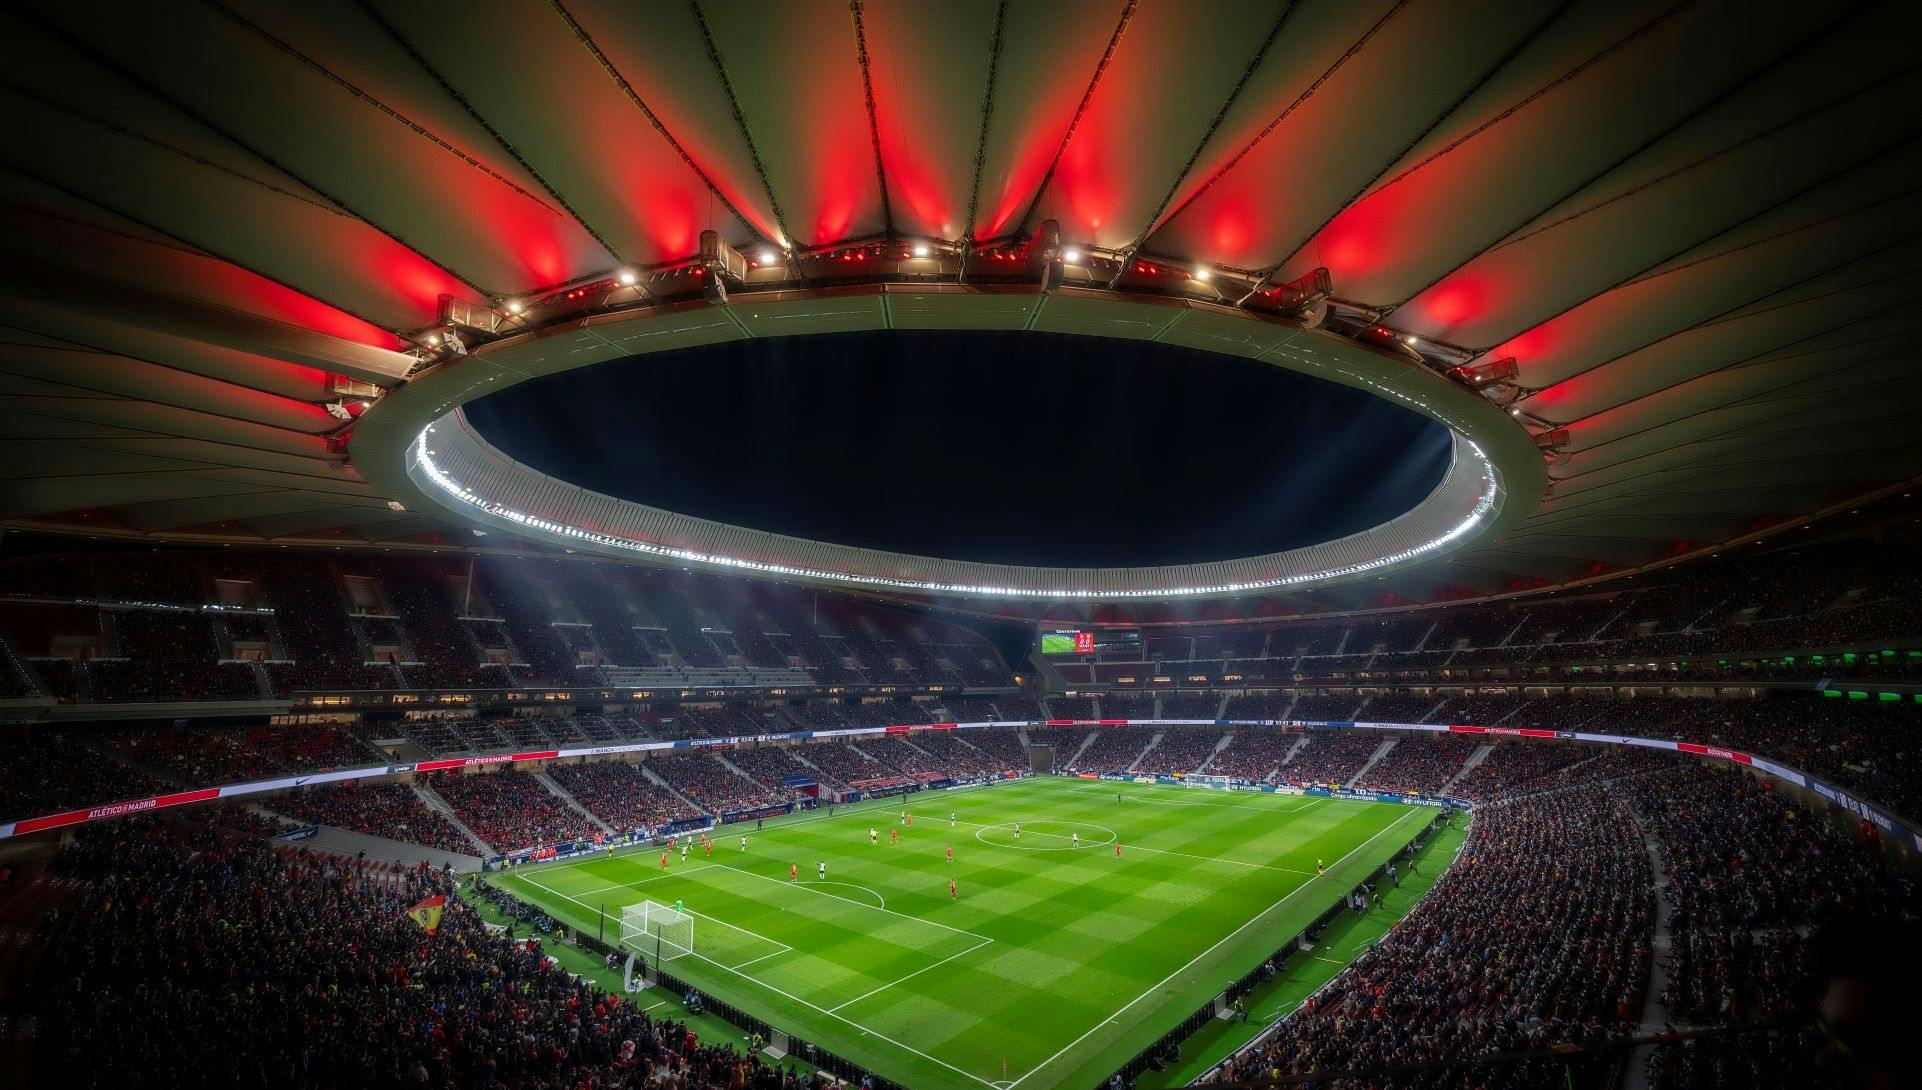 Tickets to the Atlético de Madrid museum and stadium visit